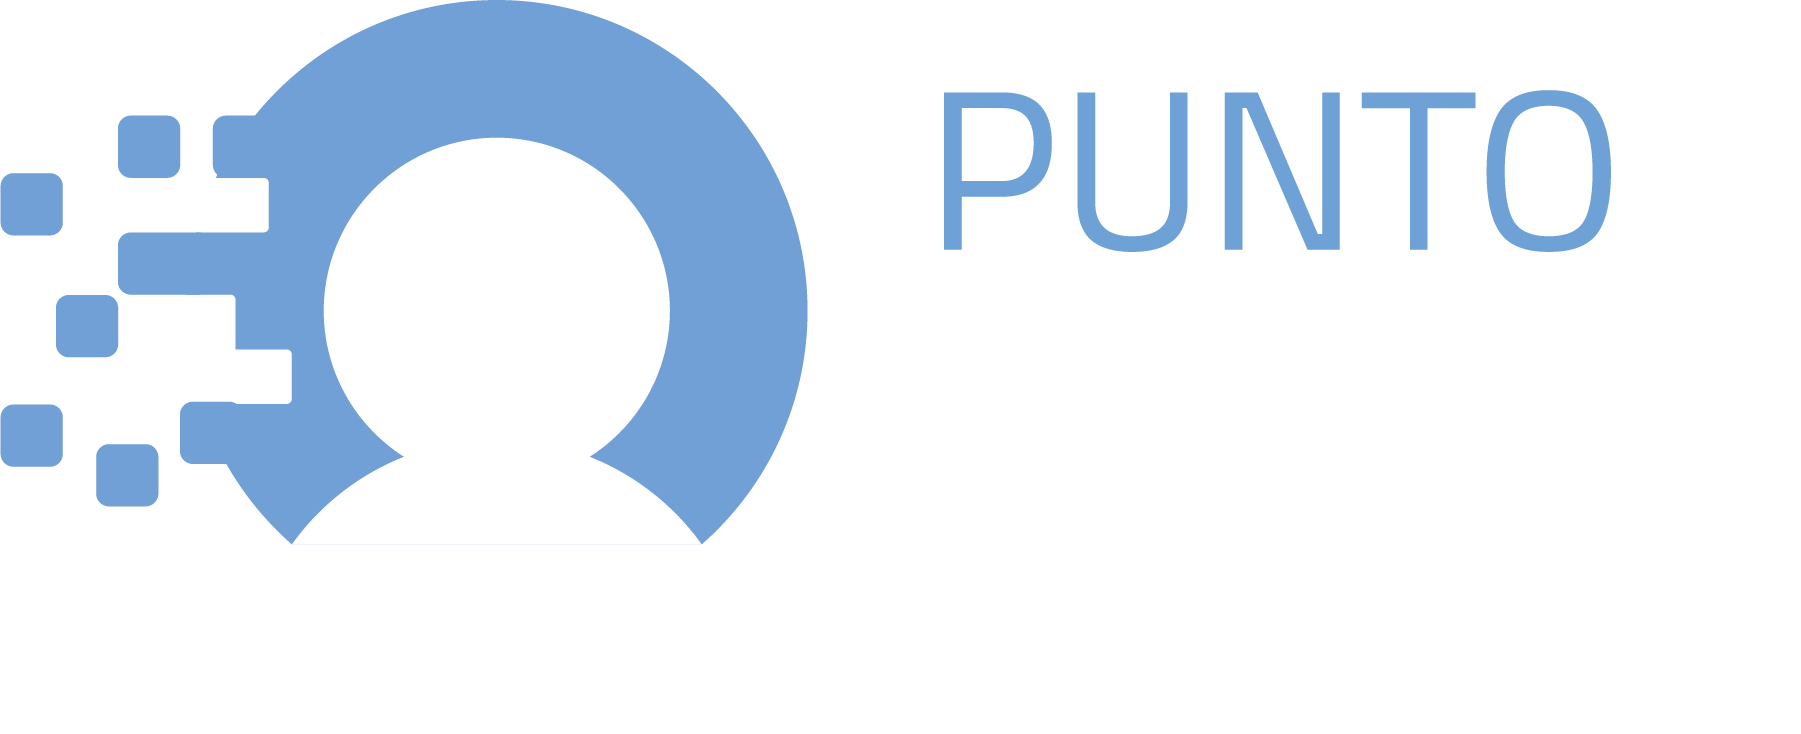 Logo Punto Digitale Facile